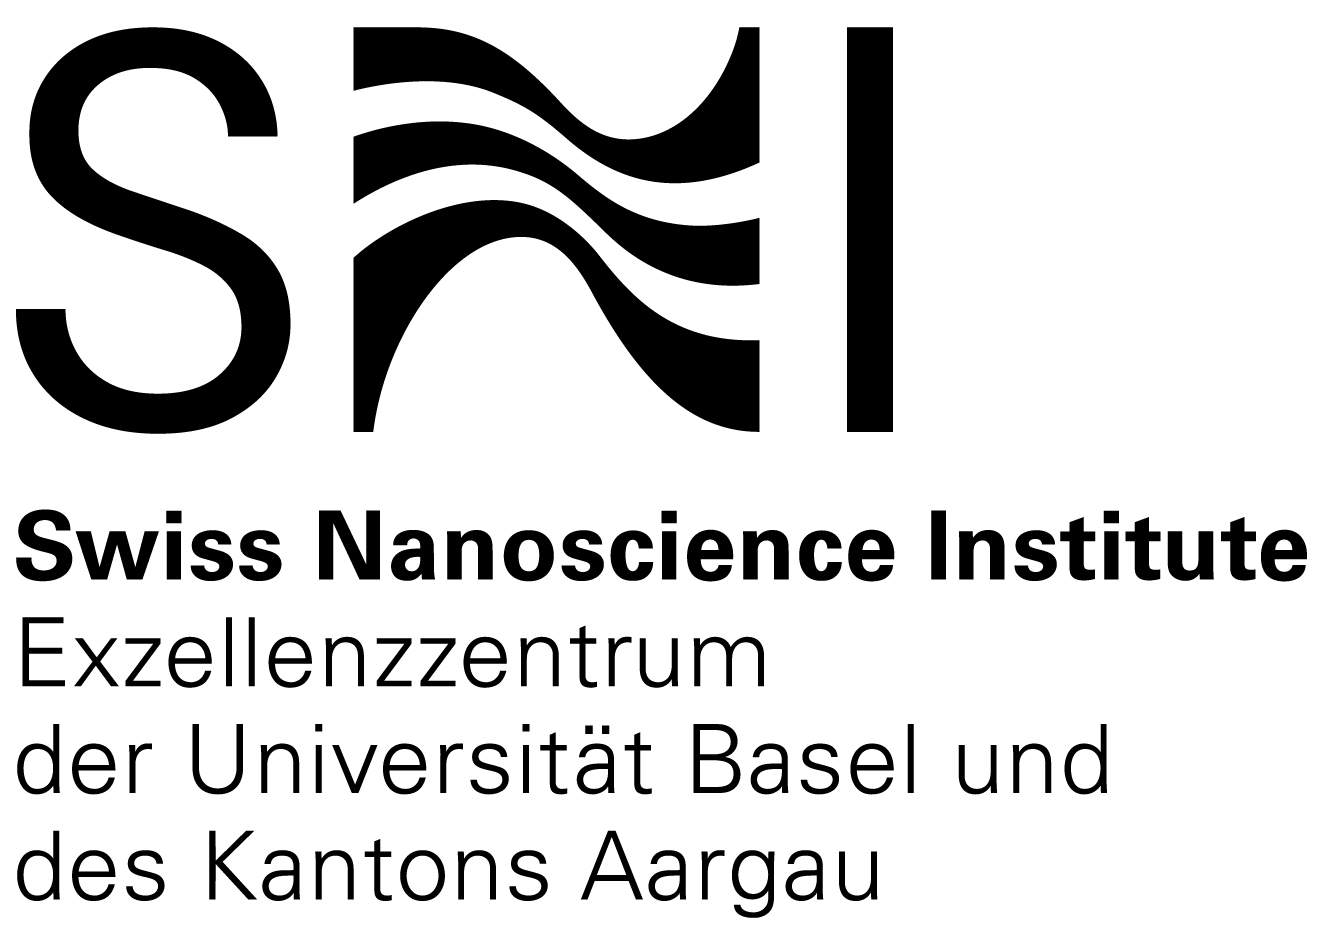 SNI logo